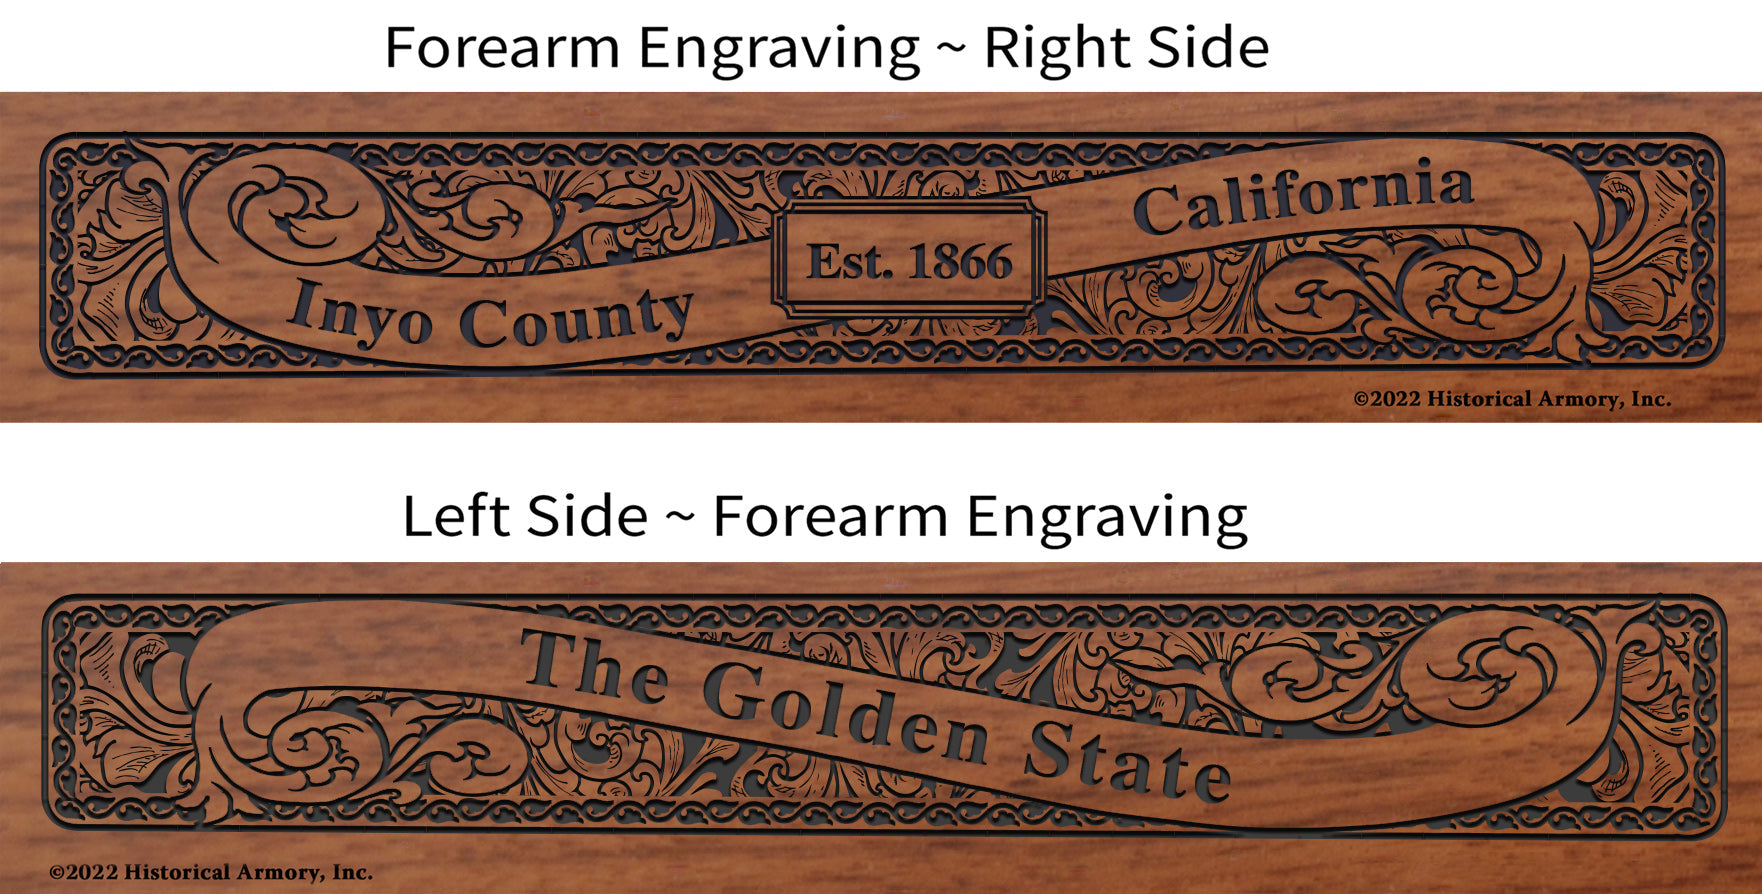 Inyo County California Engraved Rifle Forearm